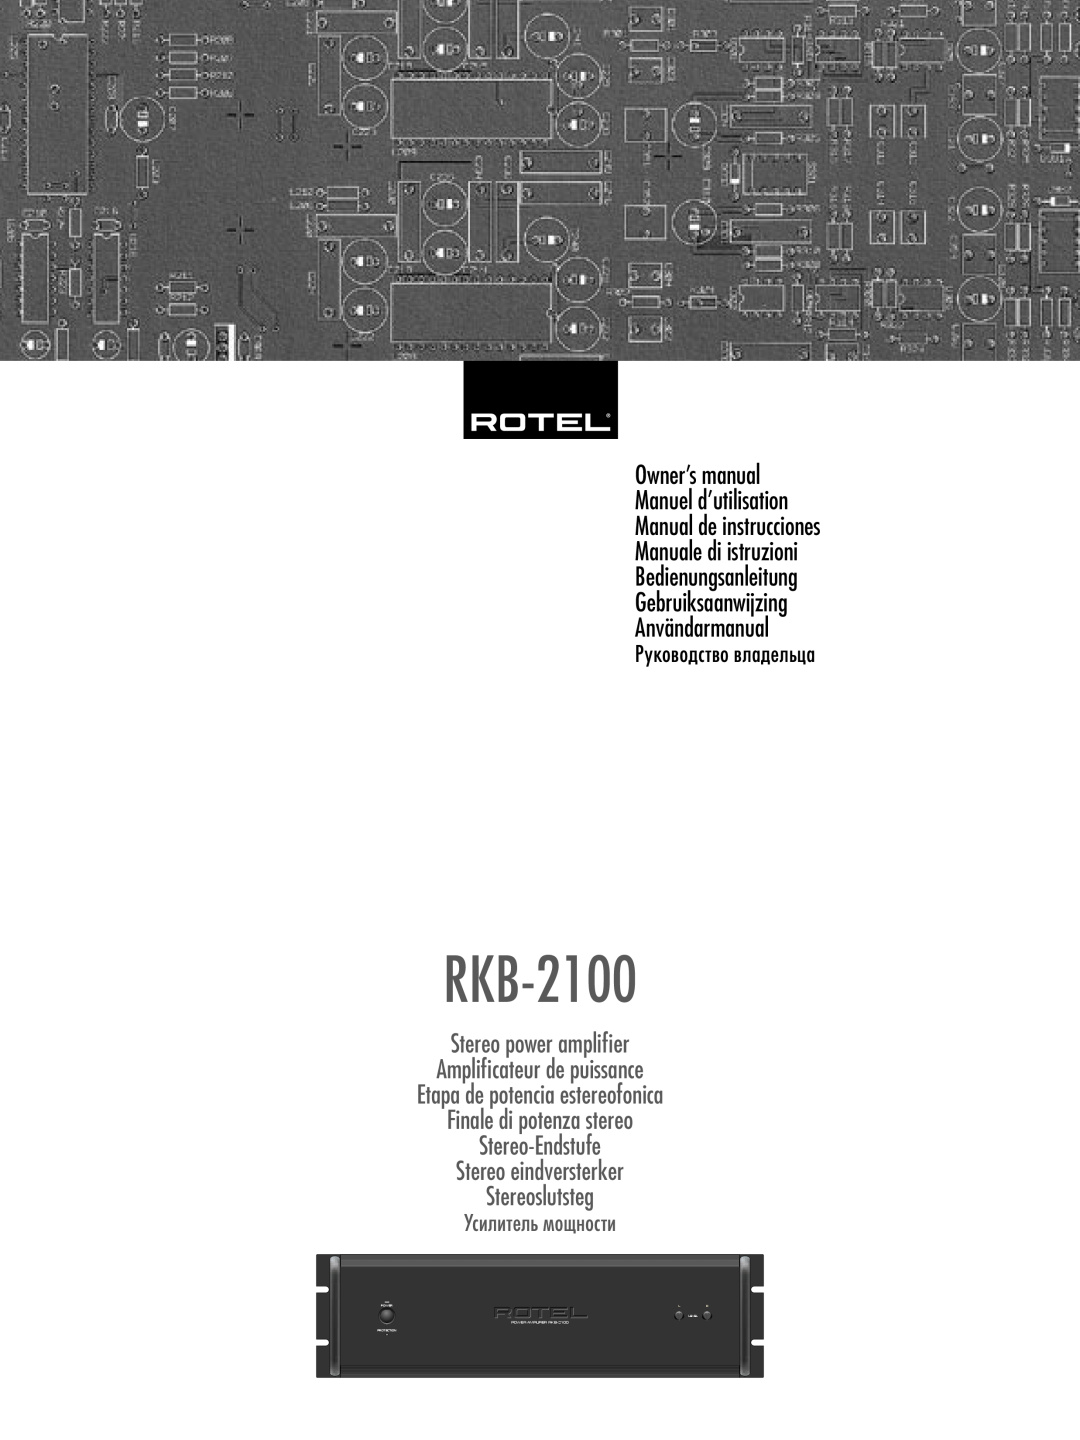 Rotel RKB-2100 owner manual Manual de instrucciones Manuale di istruzioni, Bedienungsanleitung Gebruiksaanwijzing, Power 